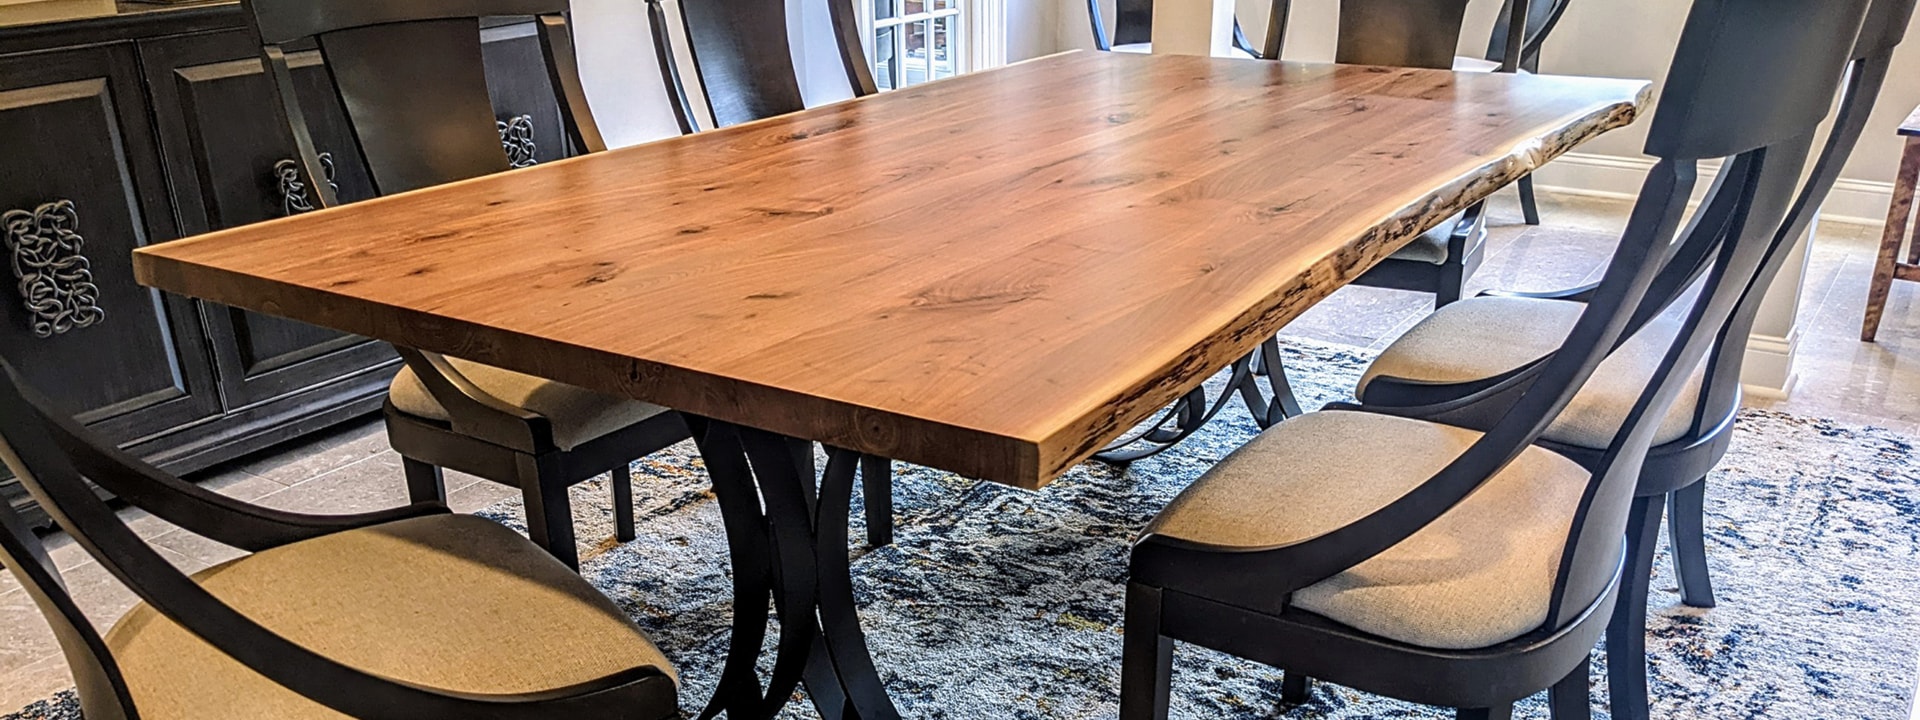 Polished Wood Top Table